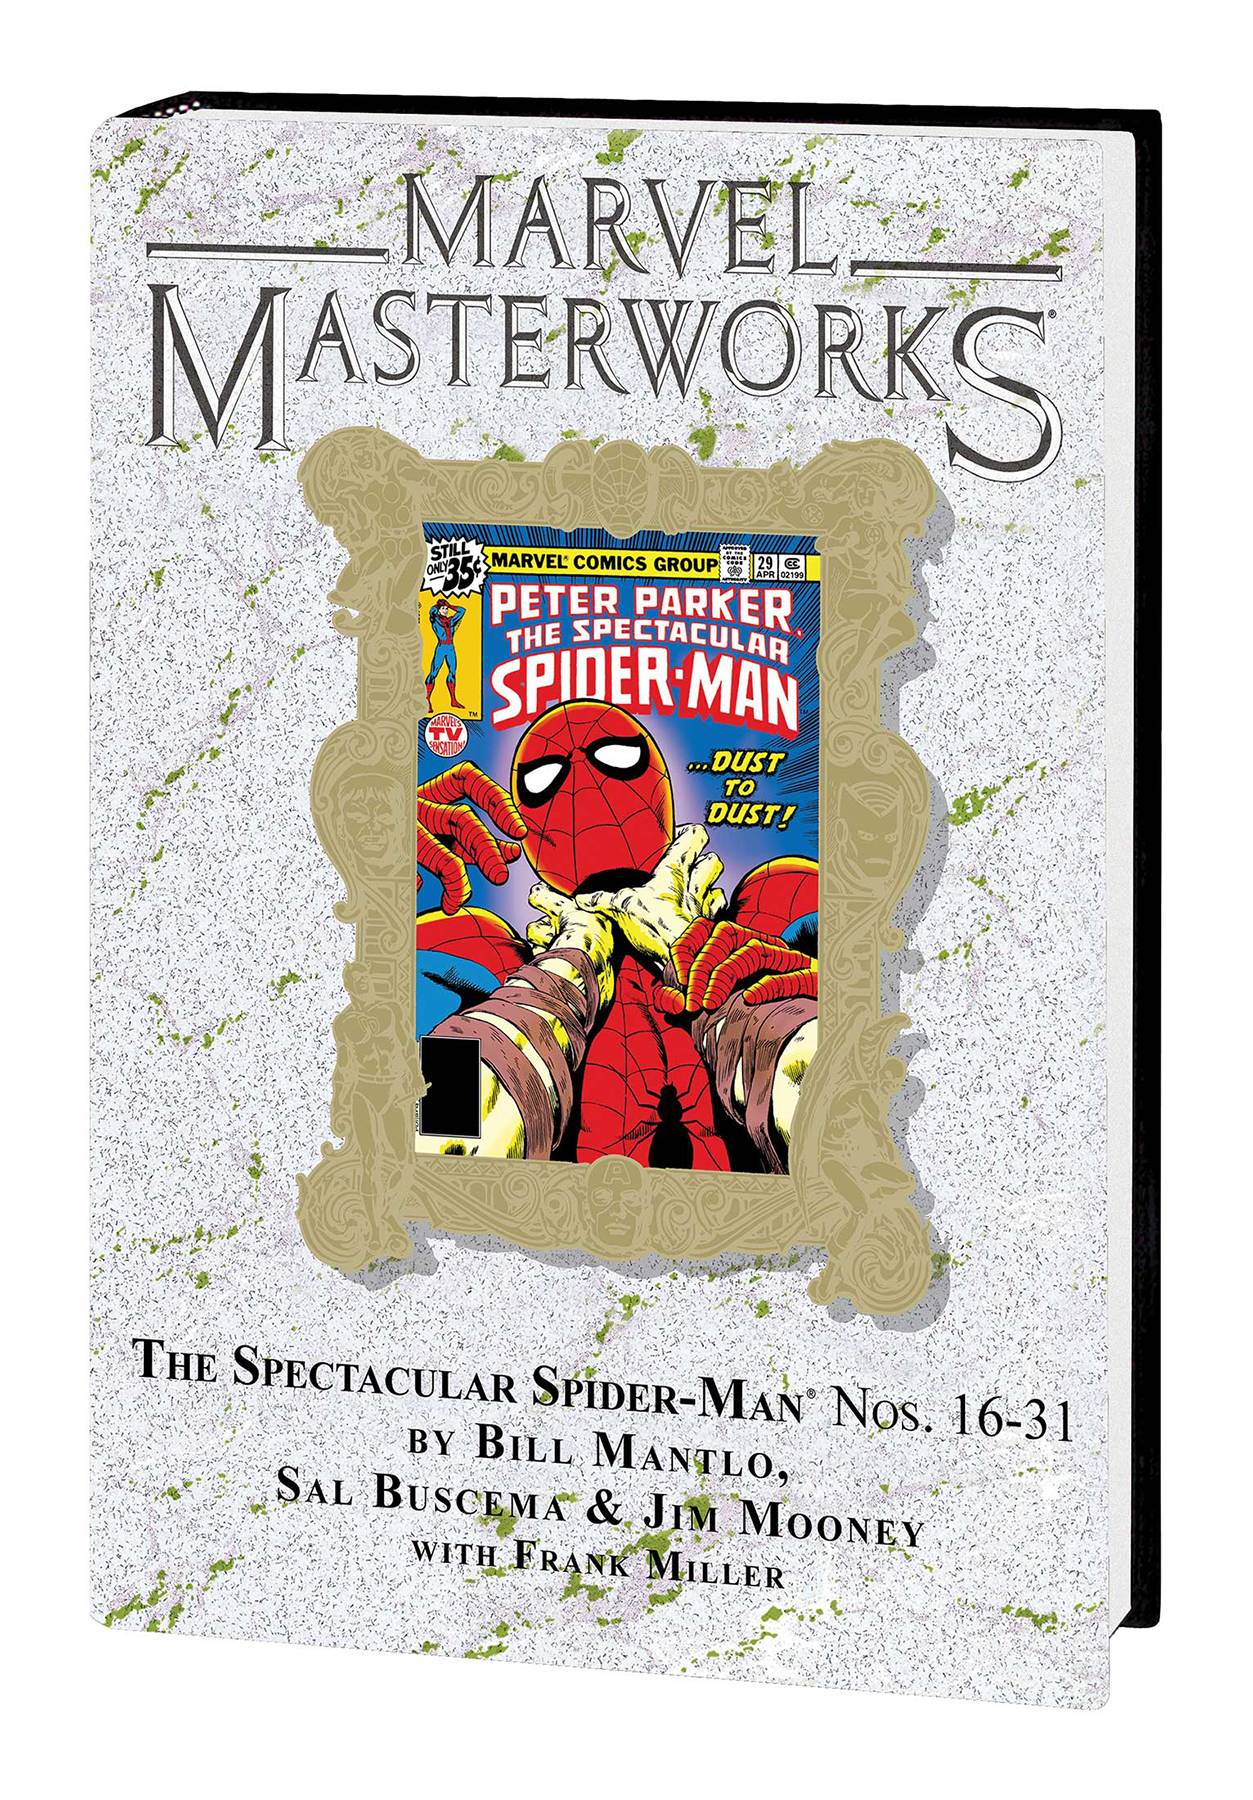 Marvel Masterworks Spectacular Spider-Man Hardcover Volume 2 Direct Market Variant Edition 276